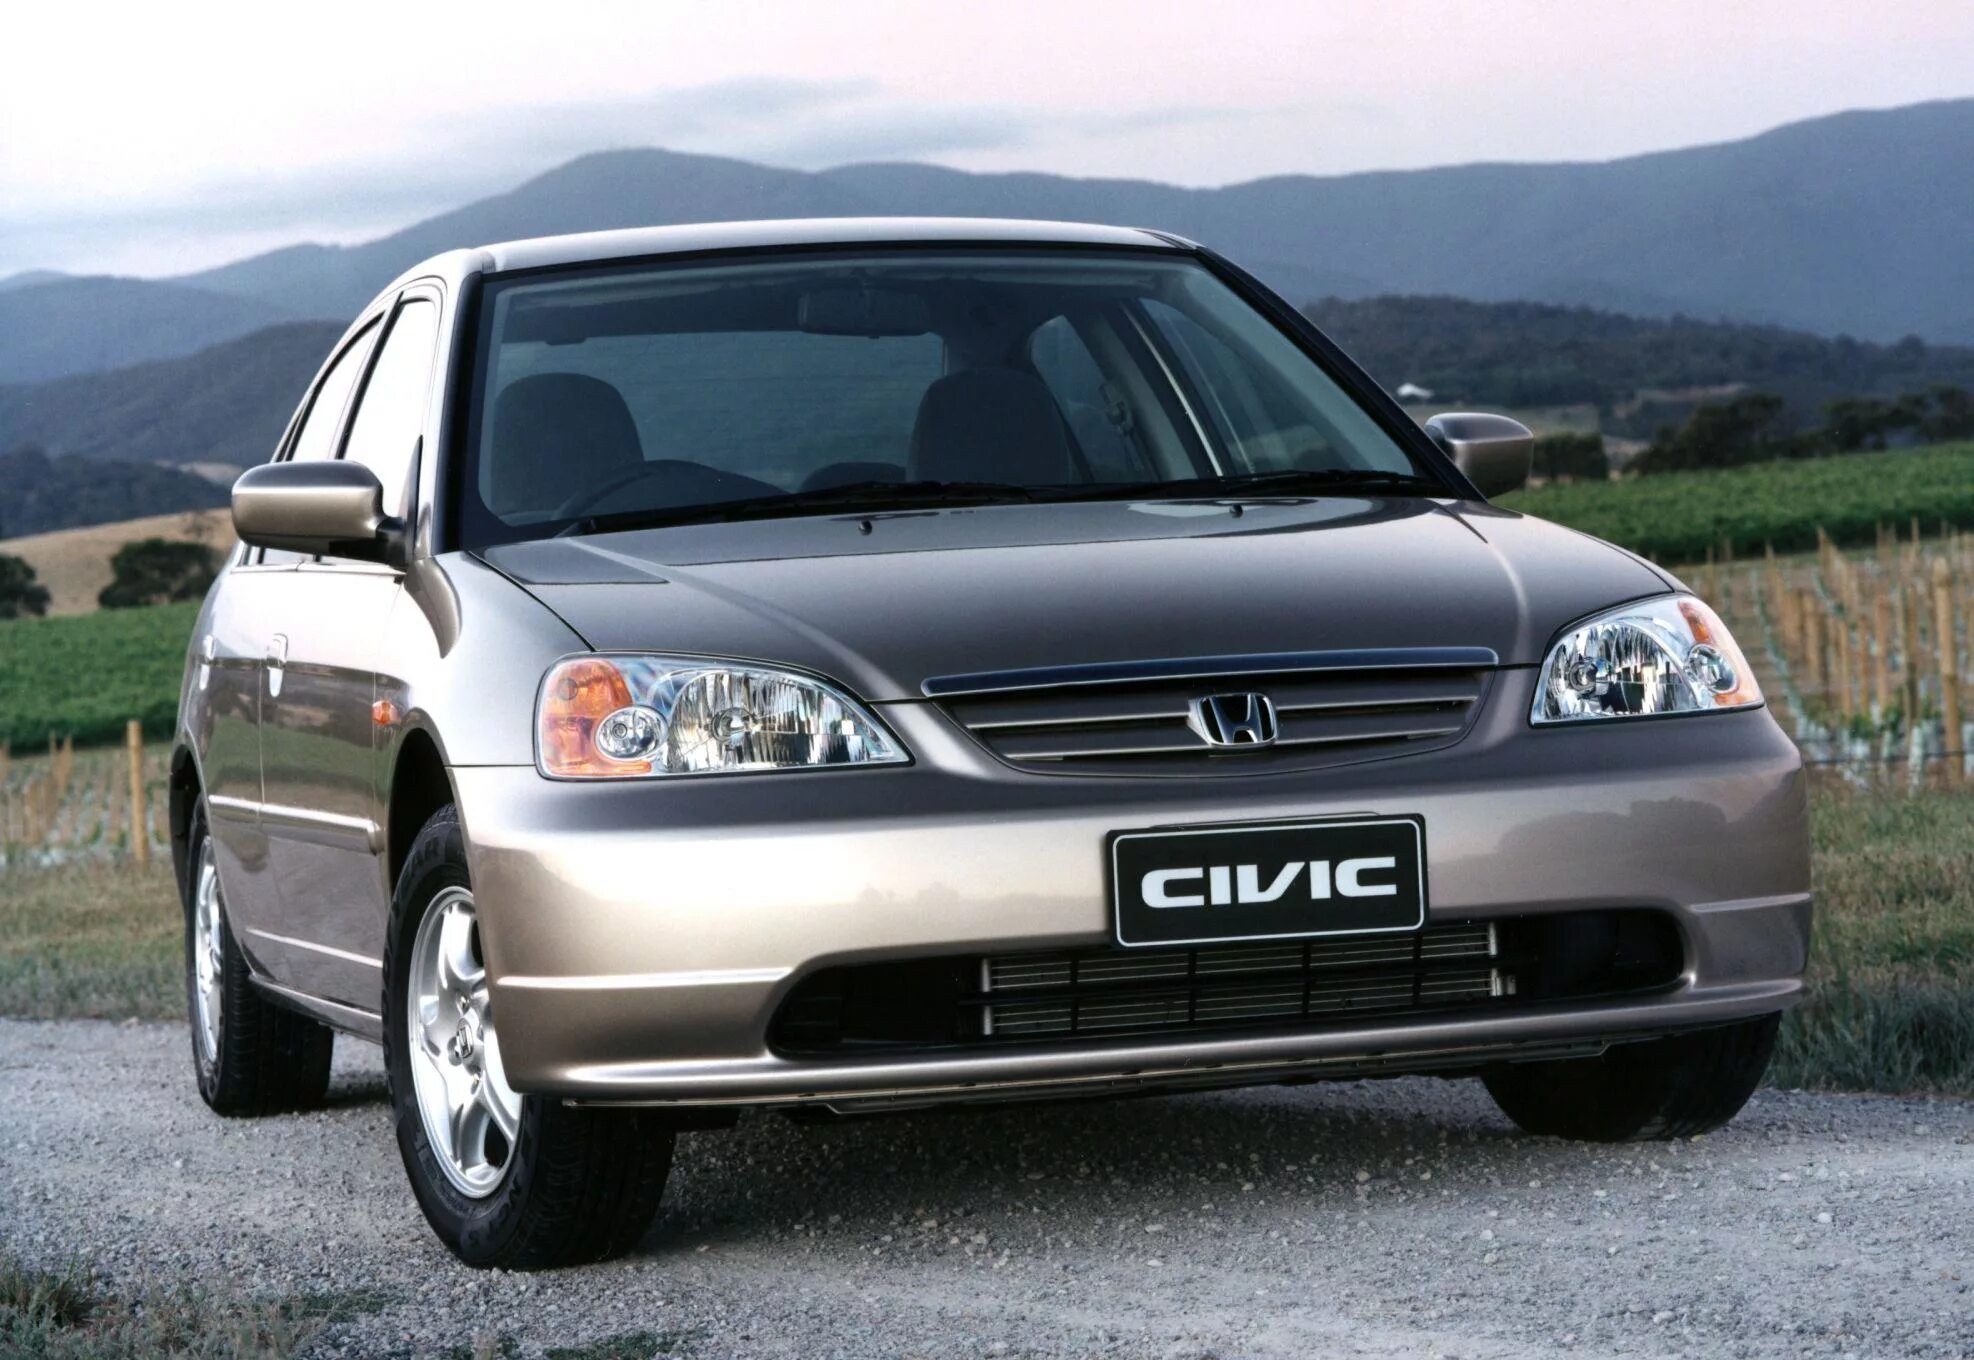 Honda civic 2000 года. Хонда Цивик седан 2000. Honda седан 2000. Хонда Цивик 2000 года седан. Honda Civic седан 2000г.